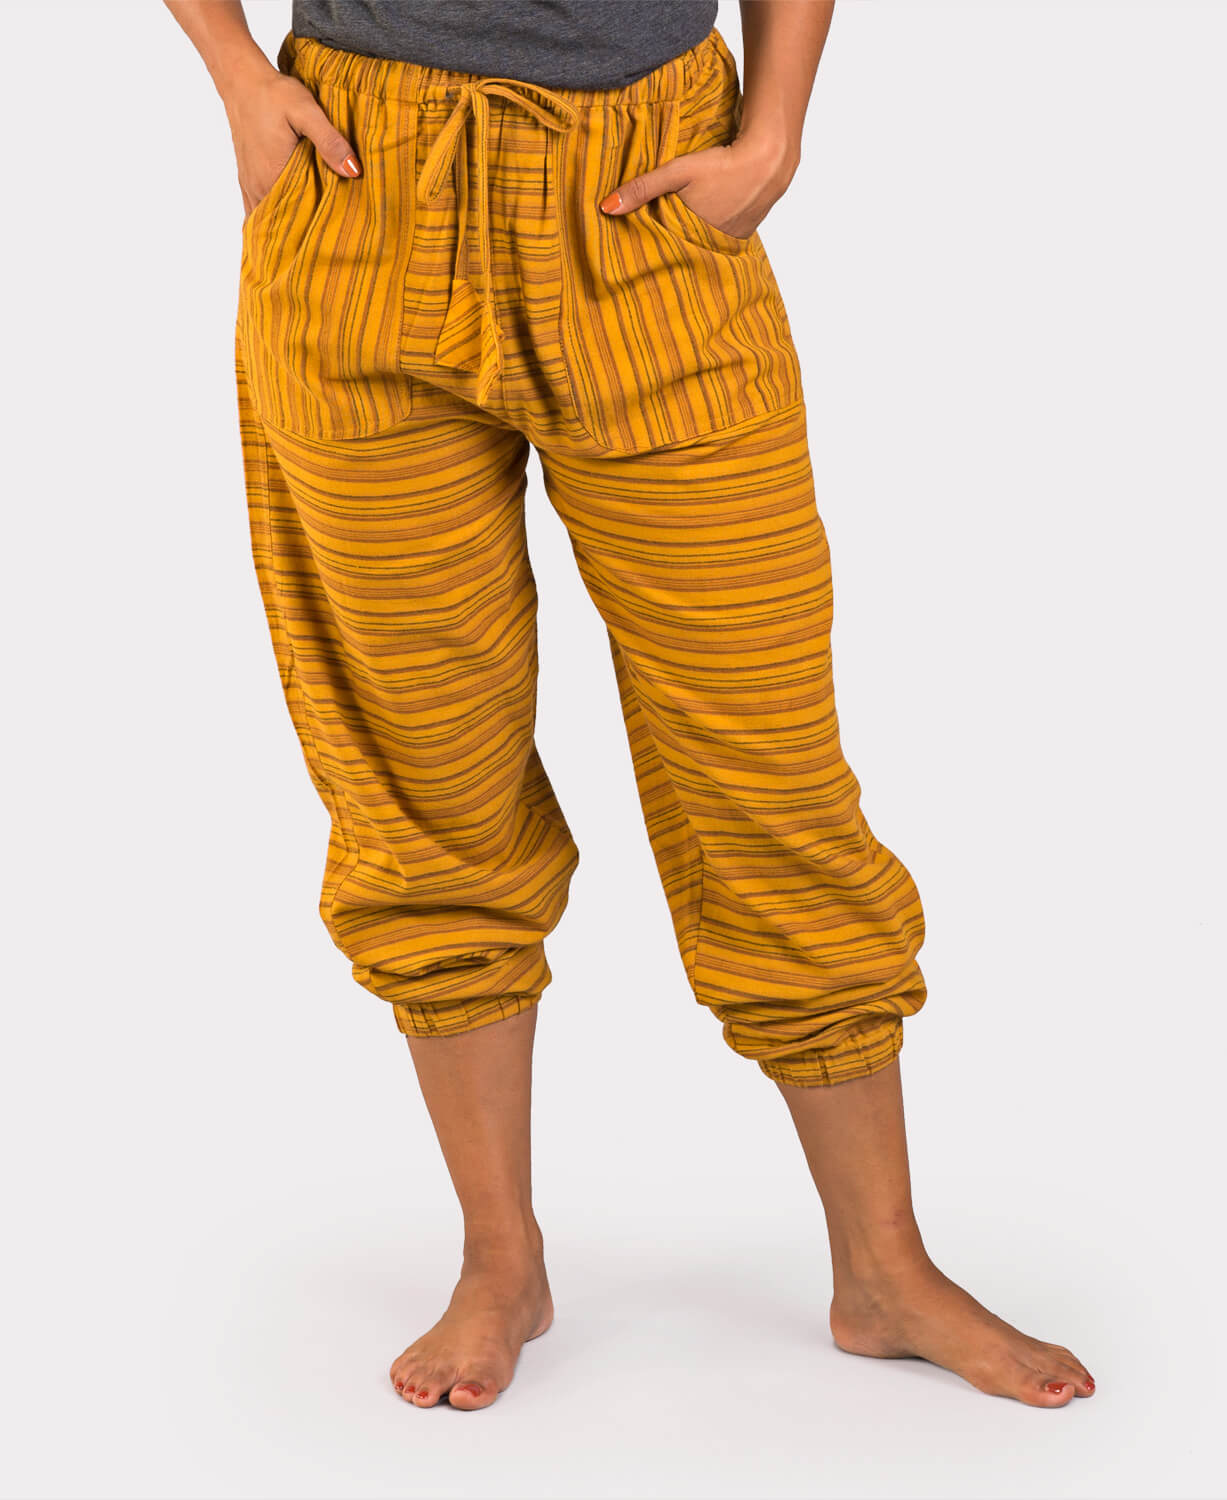 Yellow Organic Harem Pants Women Plus Size Clothing, Loose Harem